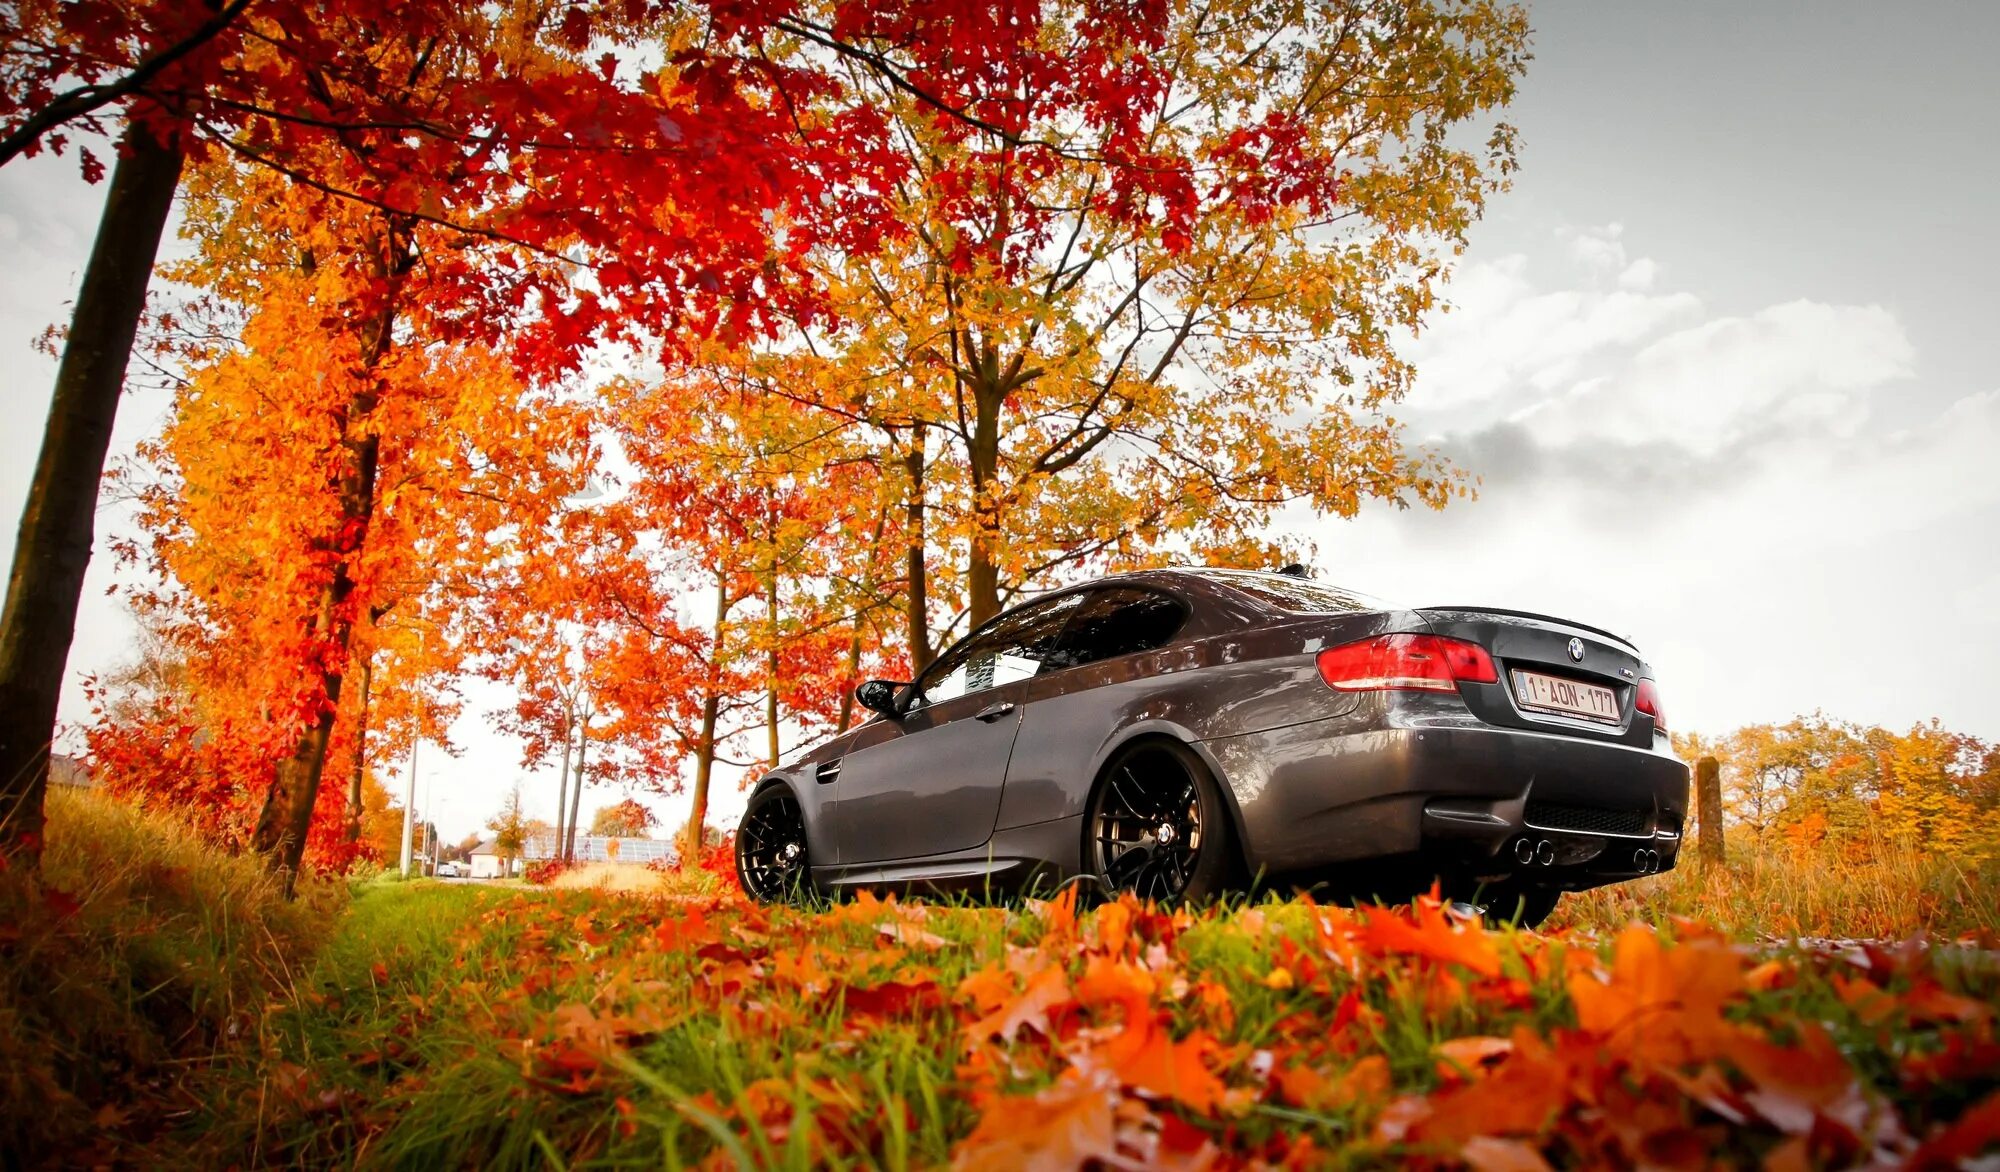 Avto c. BMW f30 осень. BMW 320i осень. Машина осенью. Машина в осенней листве.